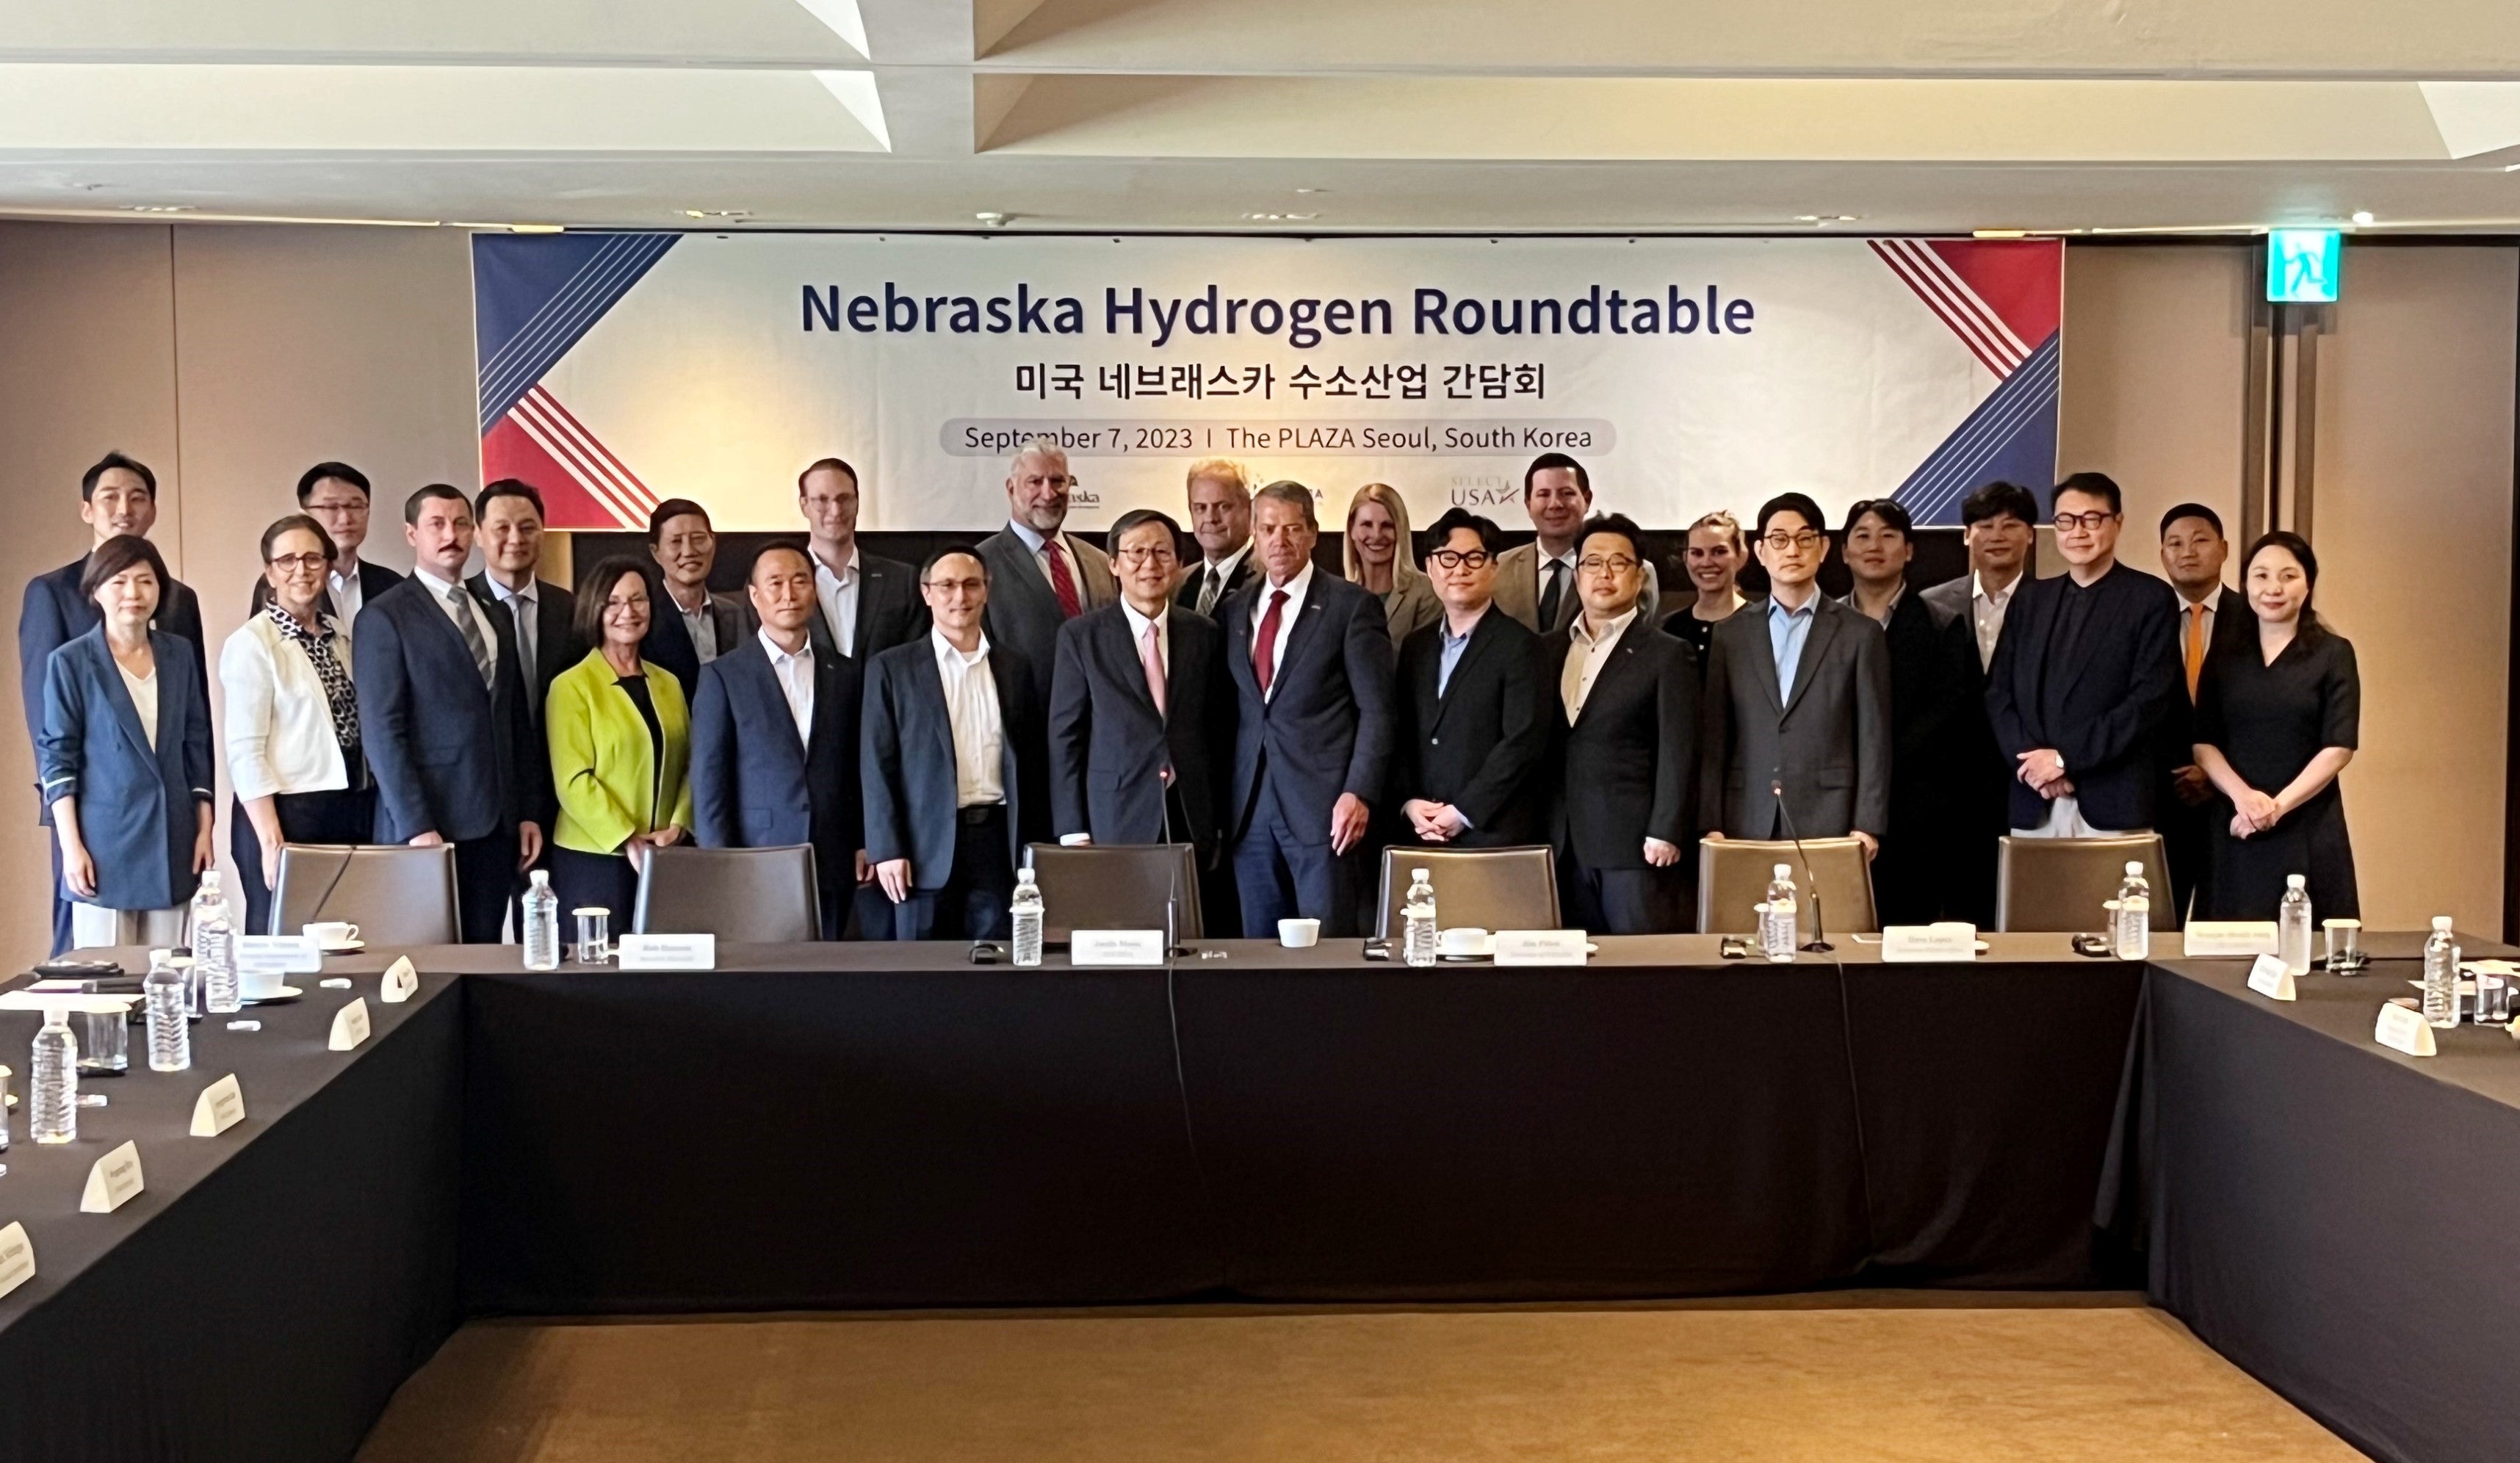 Group engages at Nebraska Hydrogen Roundtable 